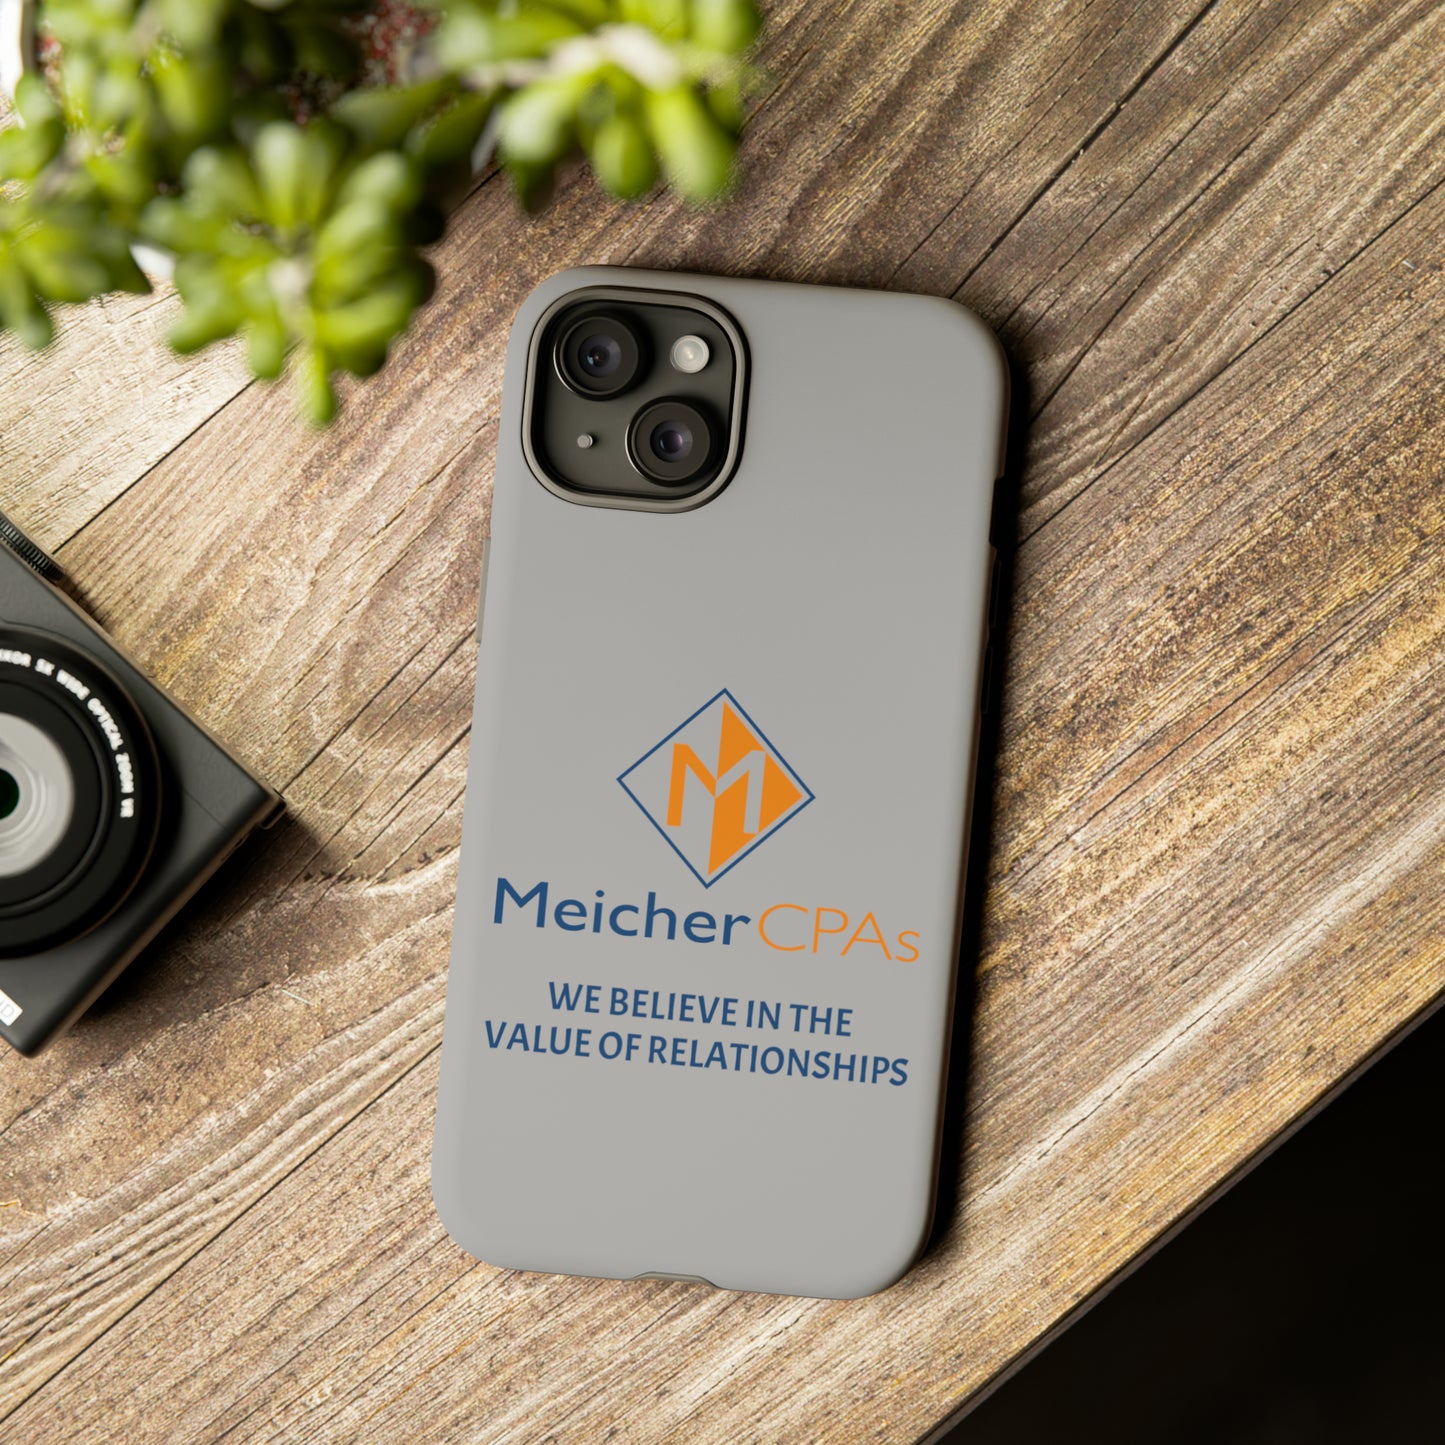 Meicher Tough Phone Cases